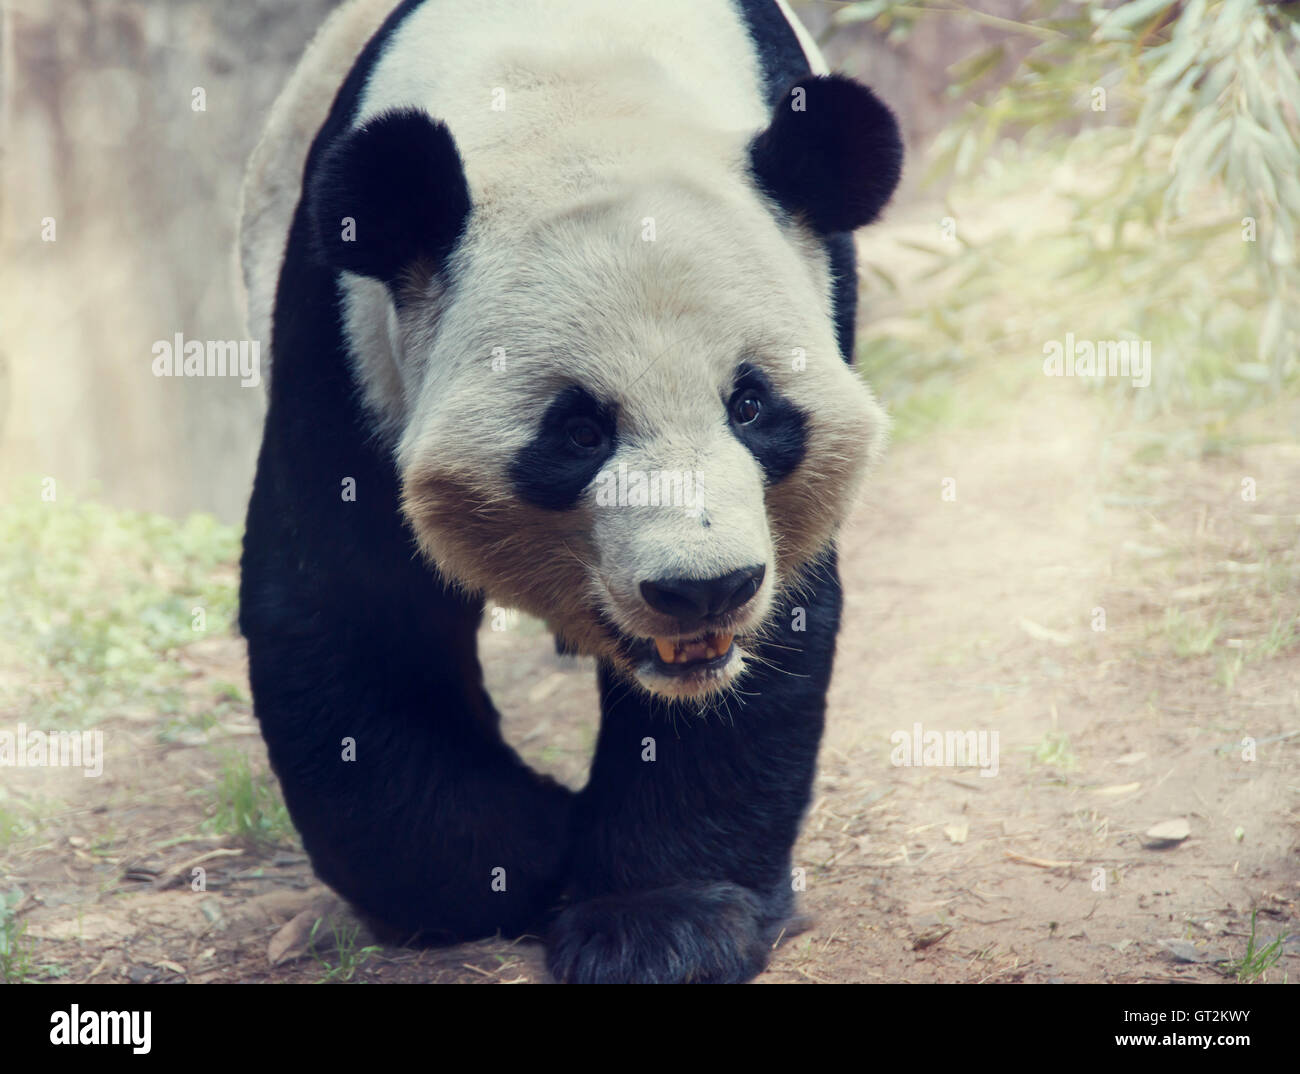 Giant Panda Bear walking in the woods Stock Photo